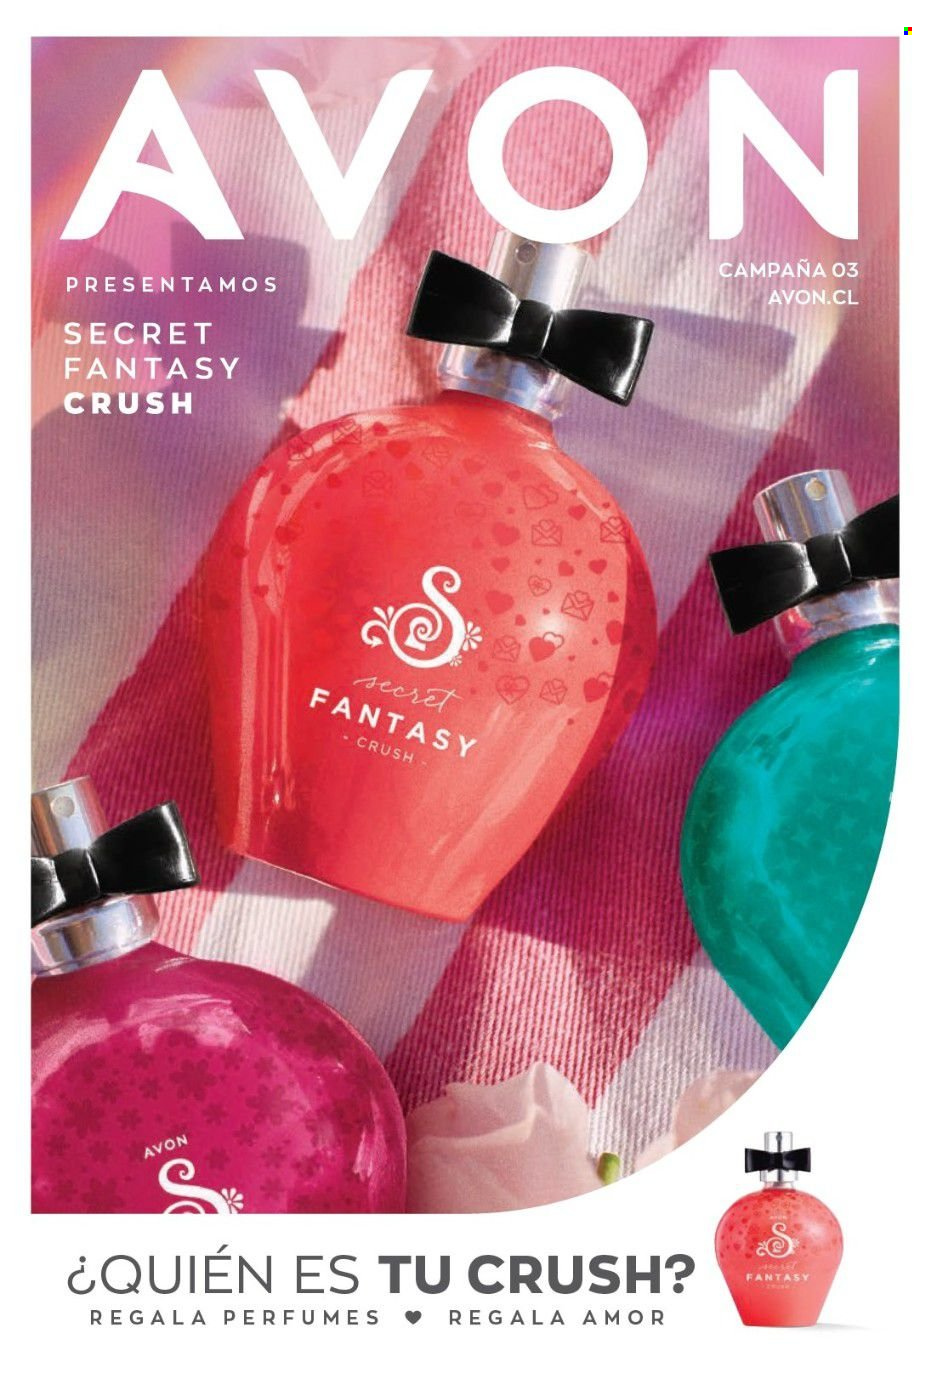 Catálogo Avon - Ventas - perfume. Página 1.